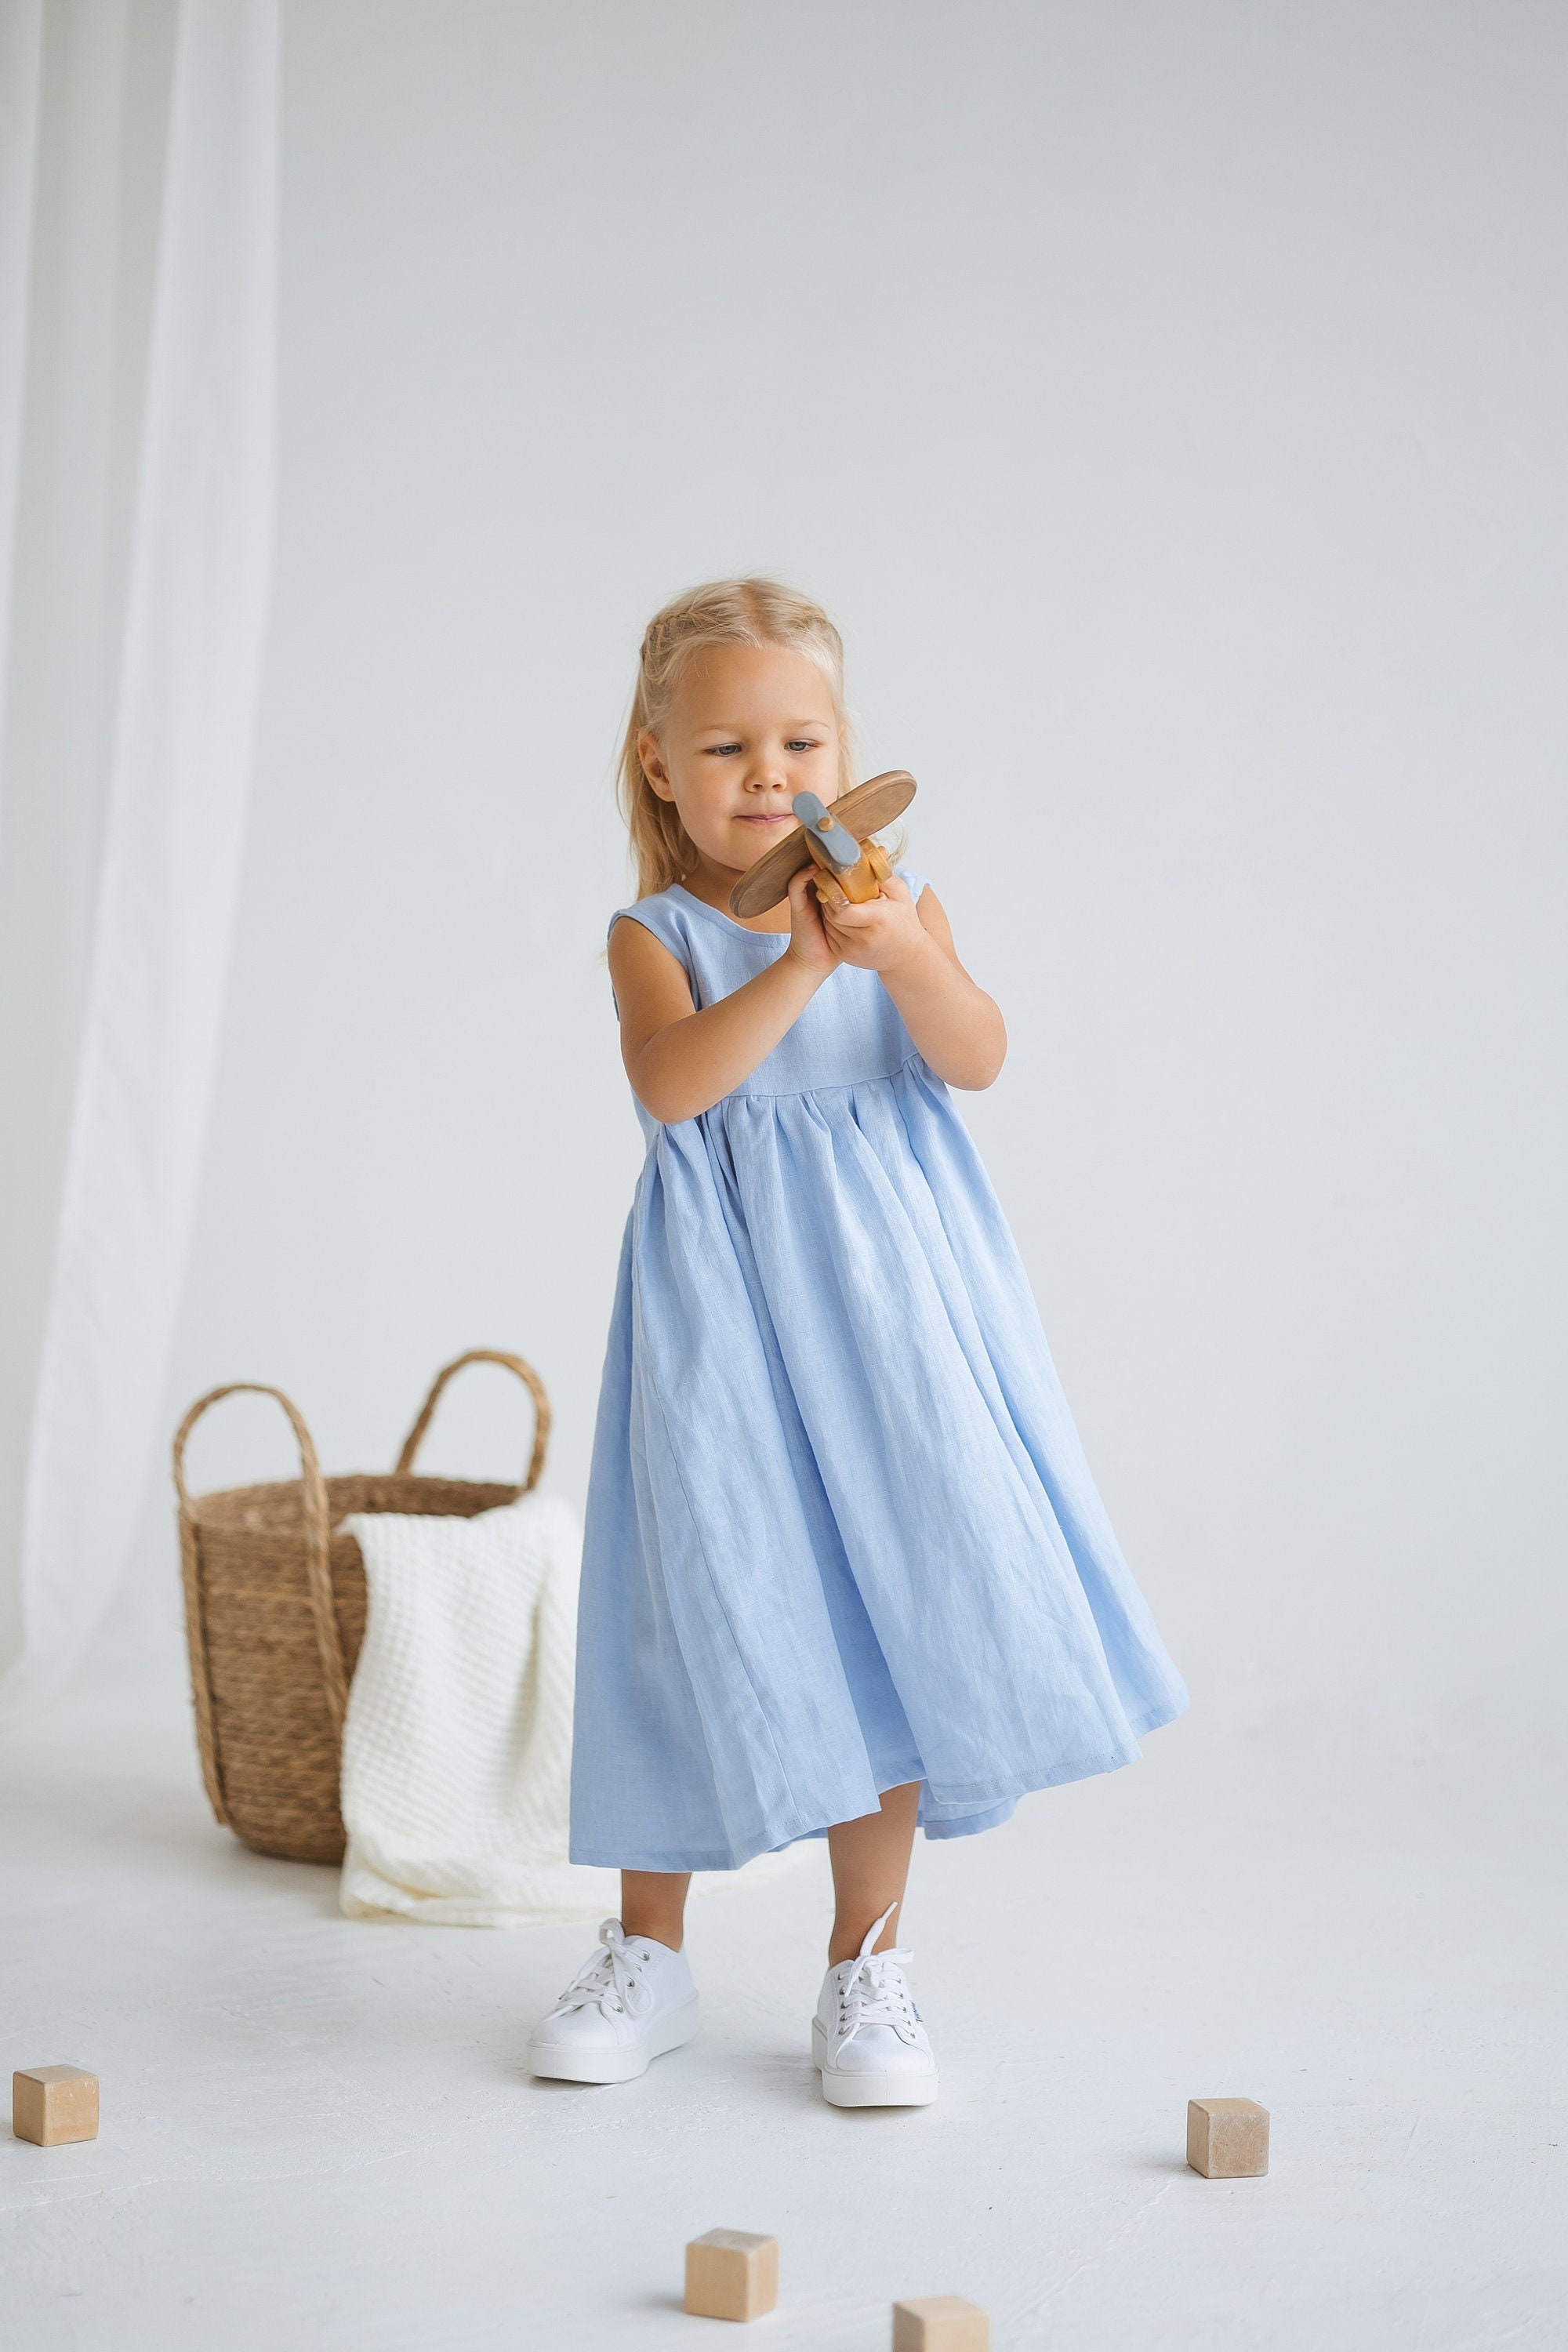 PREK Toddler Girls Summer Dress Size 3T Light Blue Cotton Chambray  Sleeveless